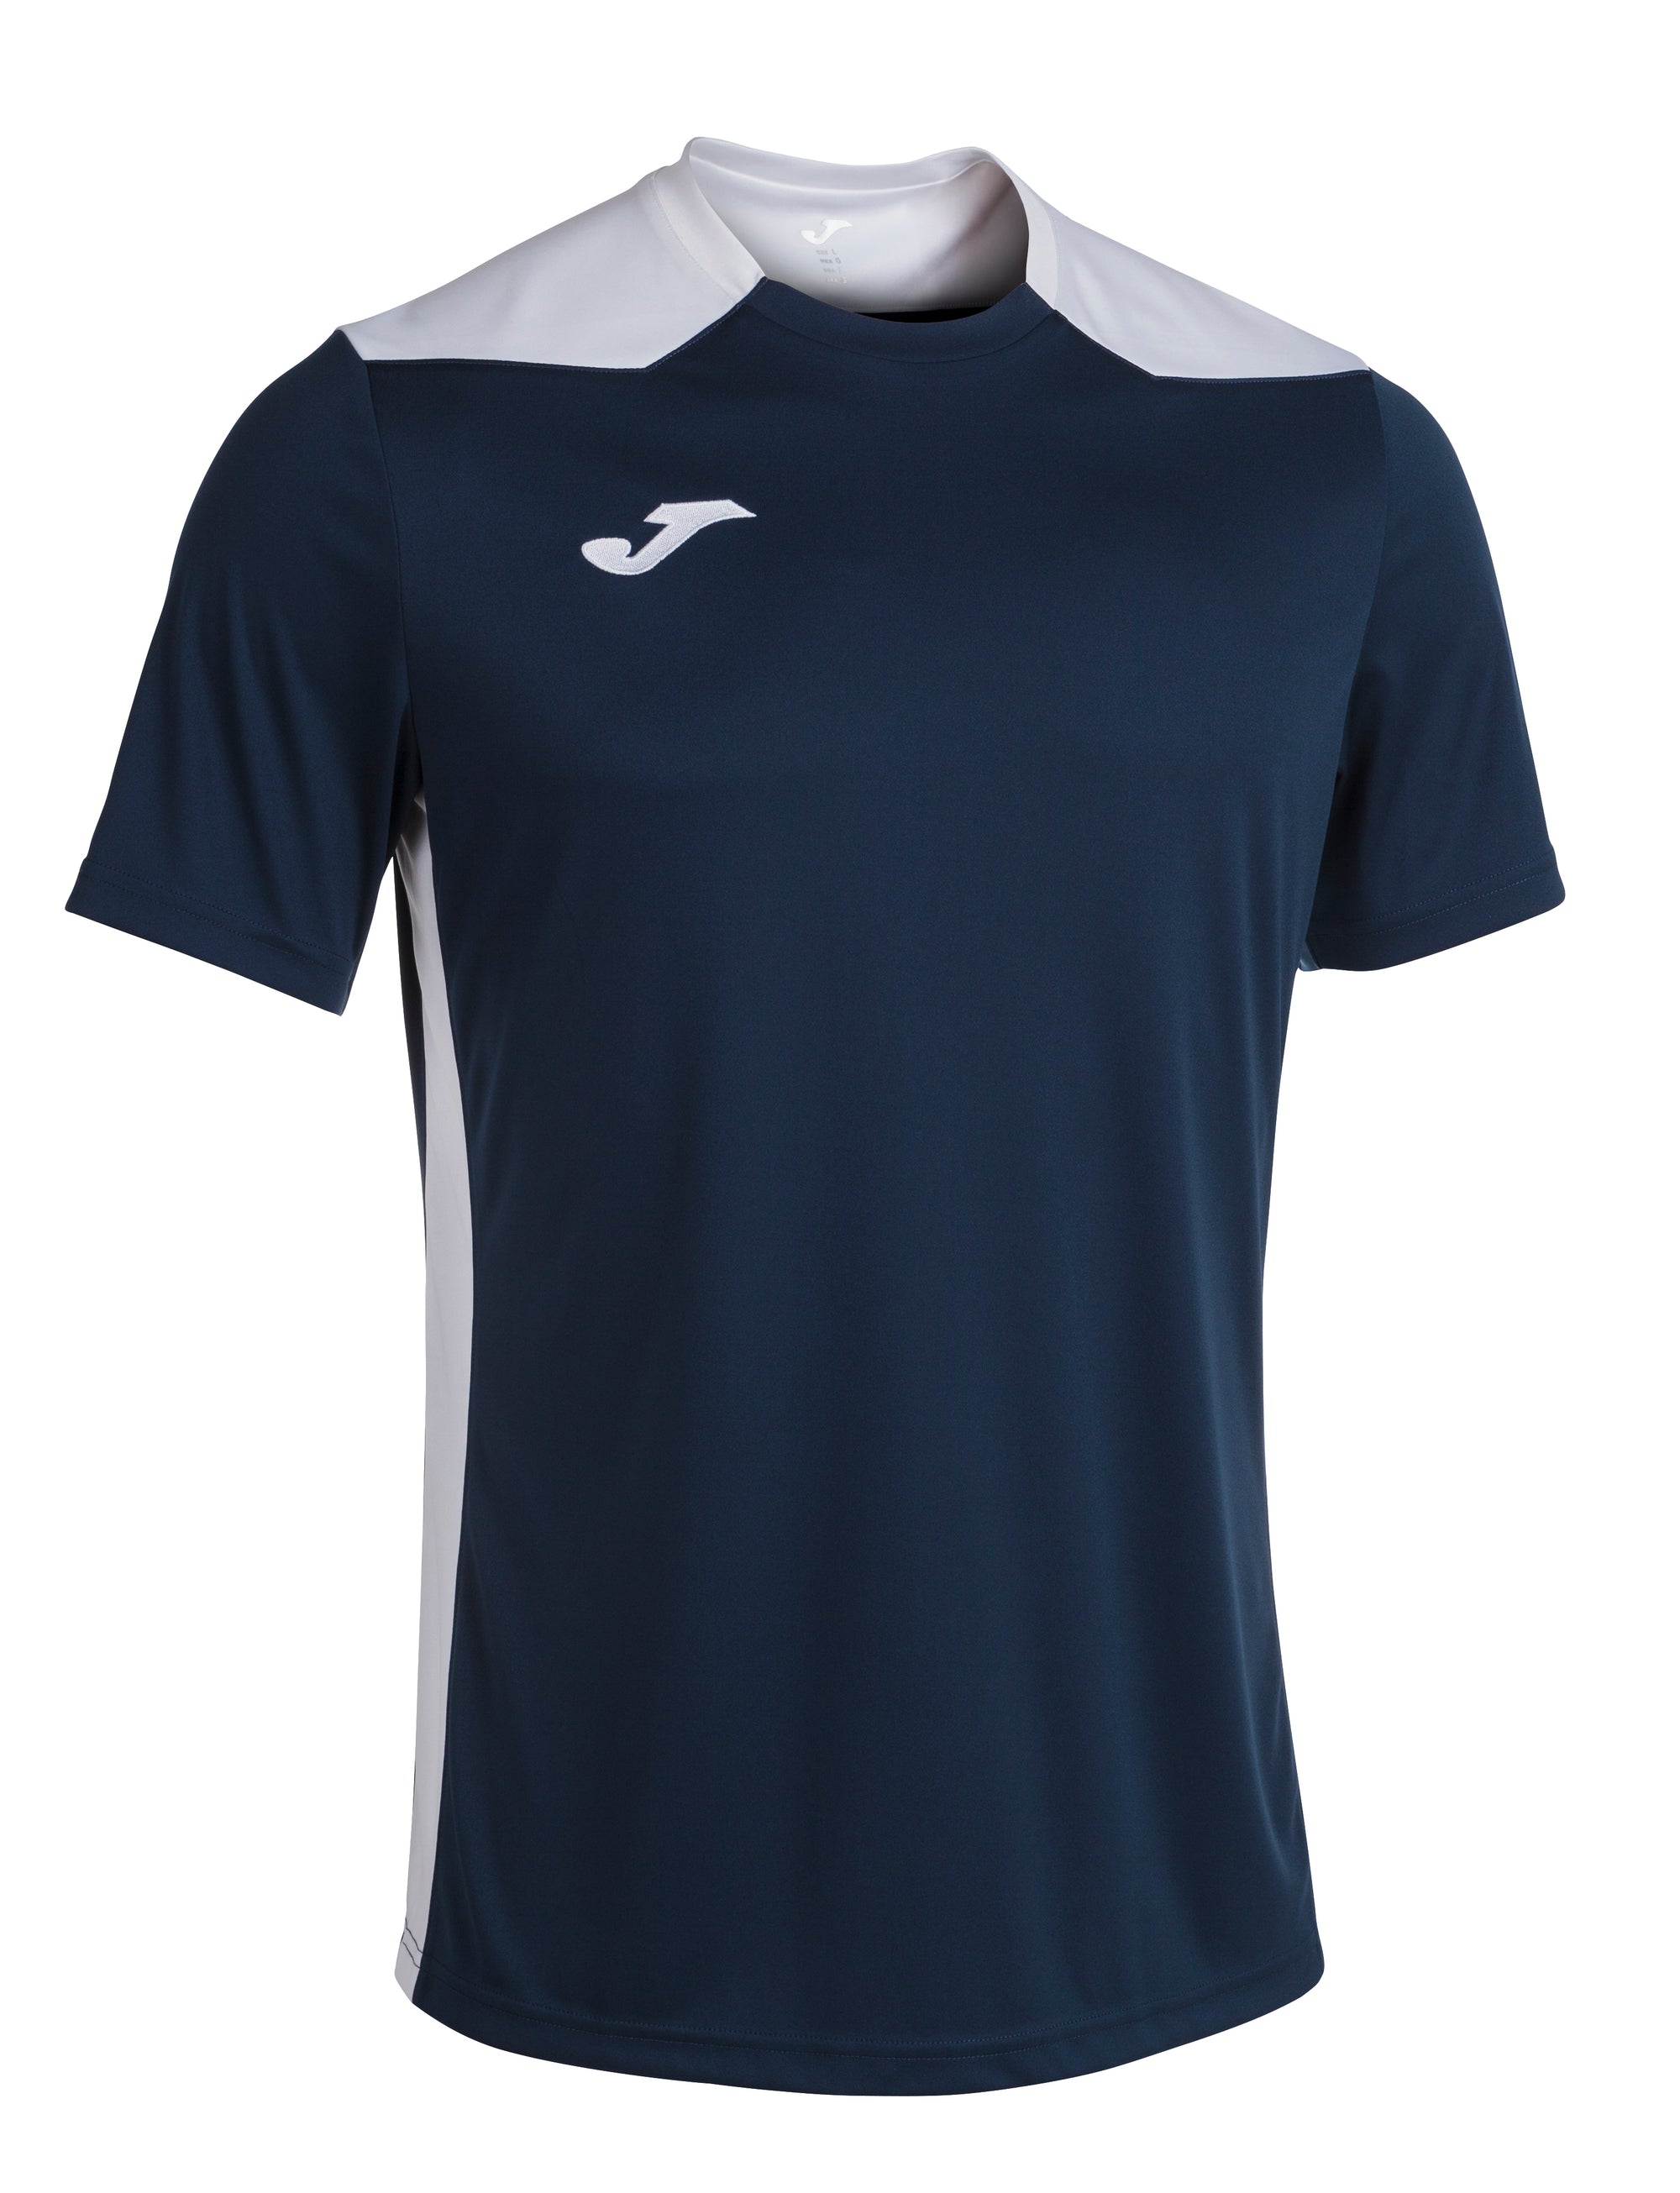 Joma Championship VI Short Sleeved T-Shirt - Dark Navy/White